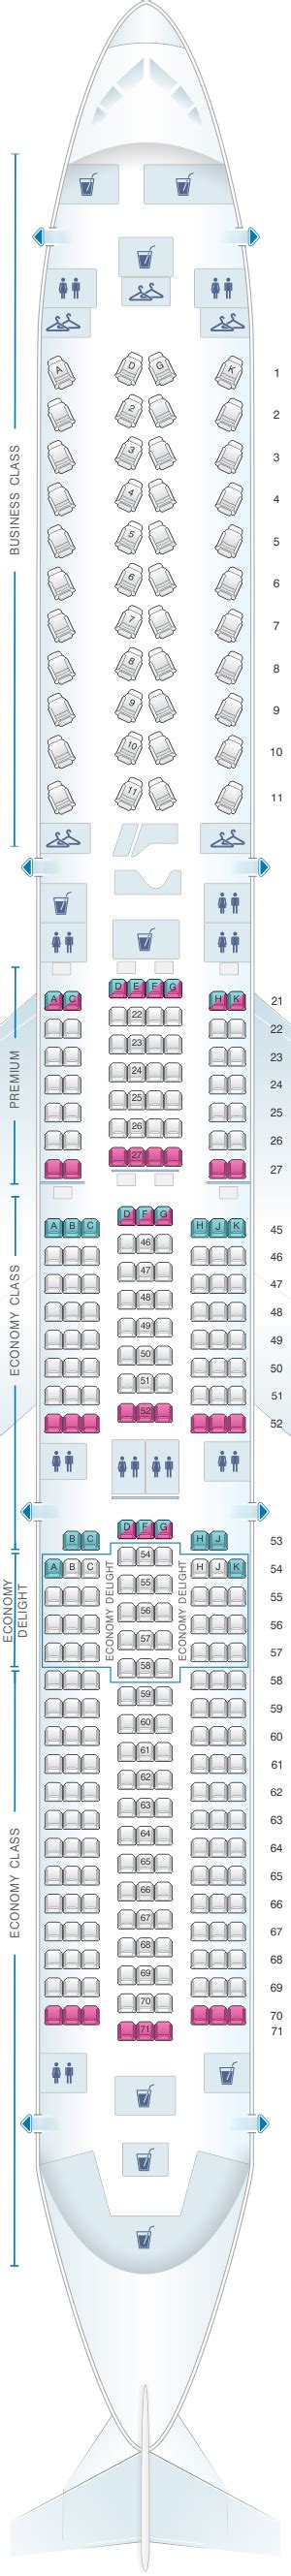 Virgin Airbus A350 Seat Map